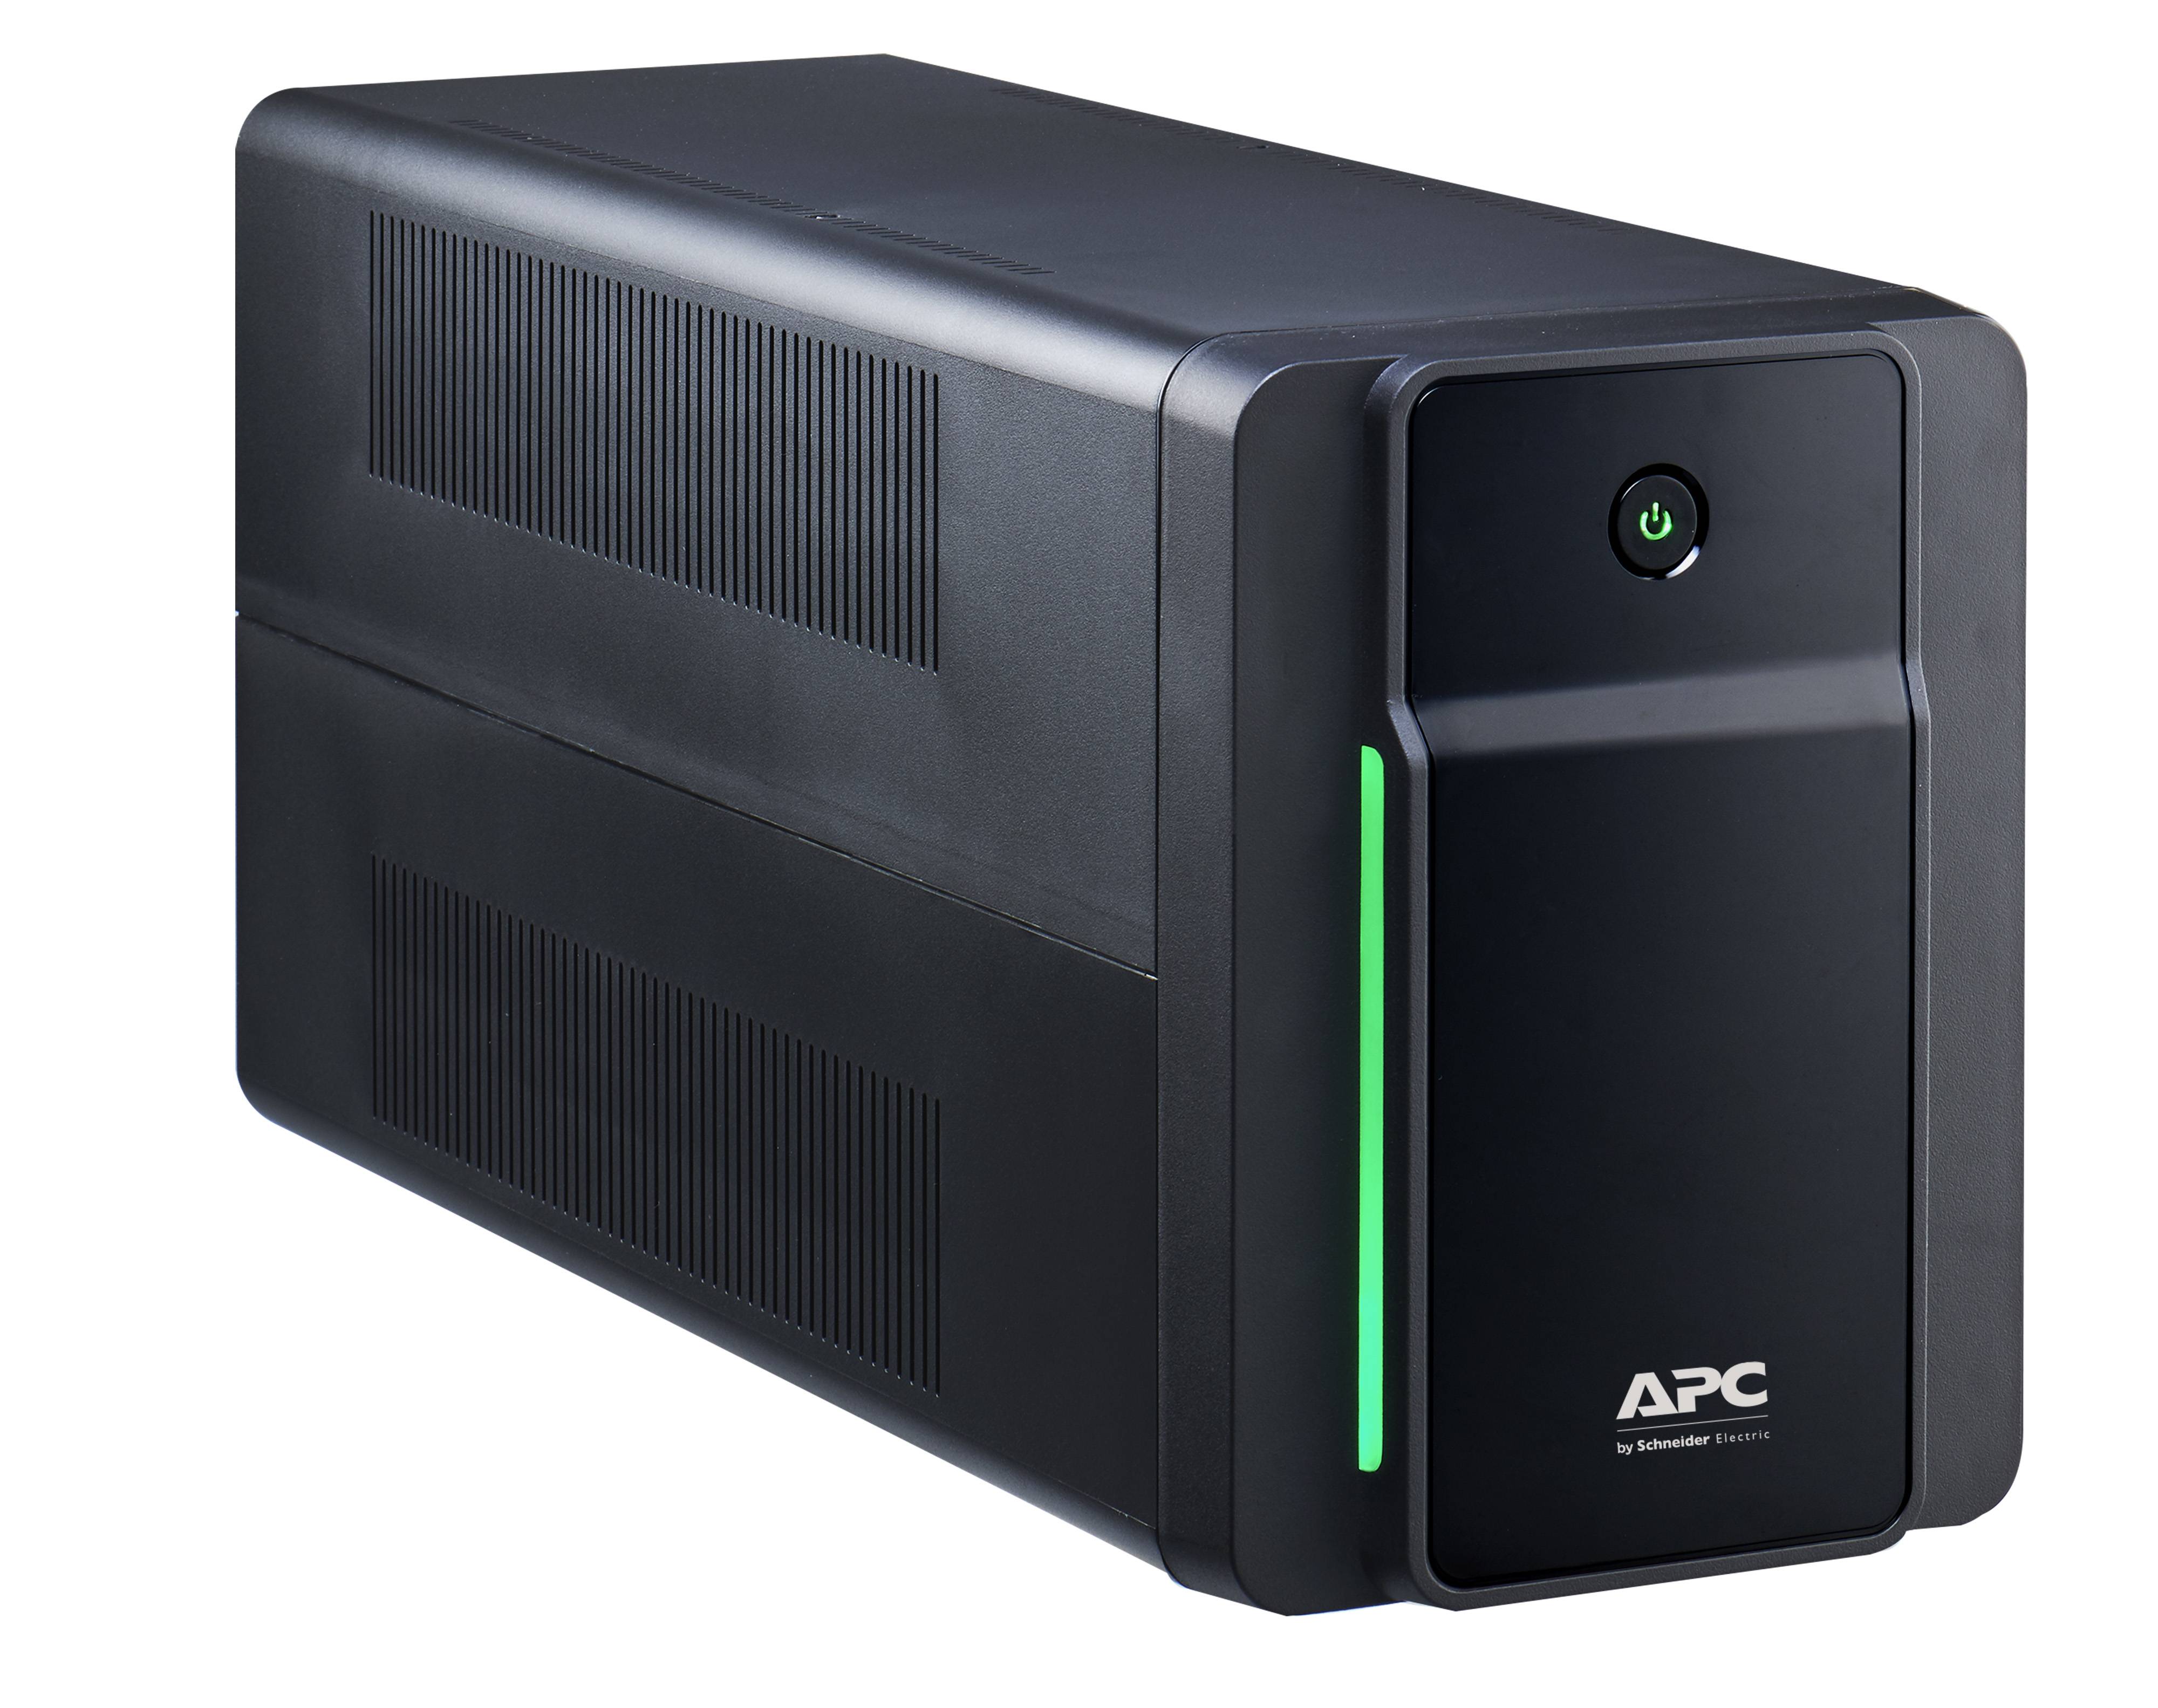 Rca Informatique - Image du produit : APC BACK-UPS 2200VA 230V AVR SCHUKO SOCKETS